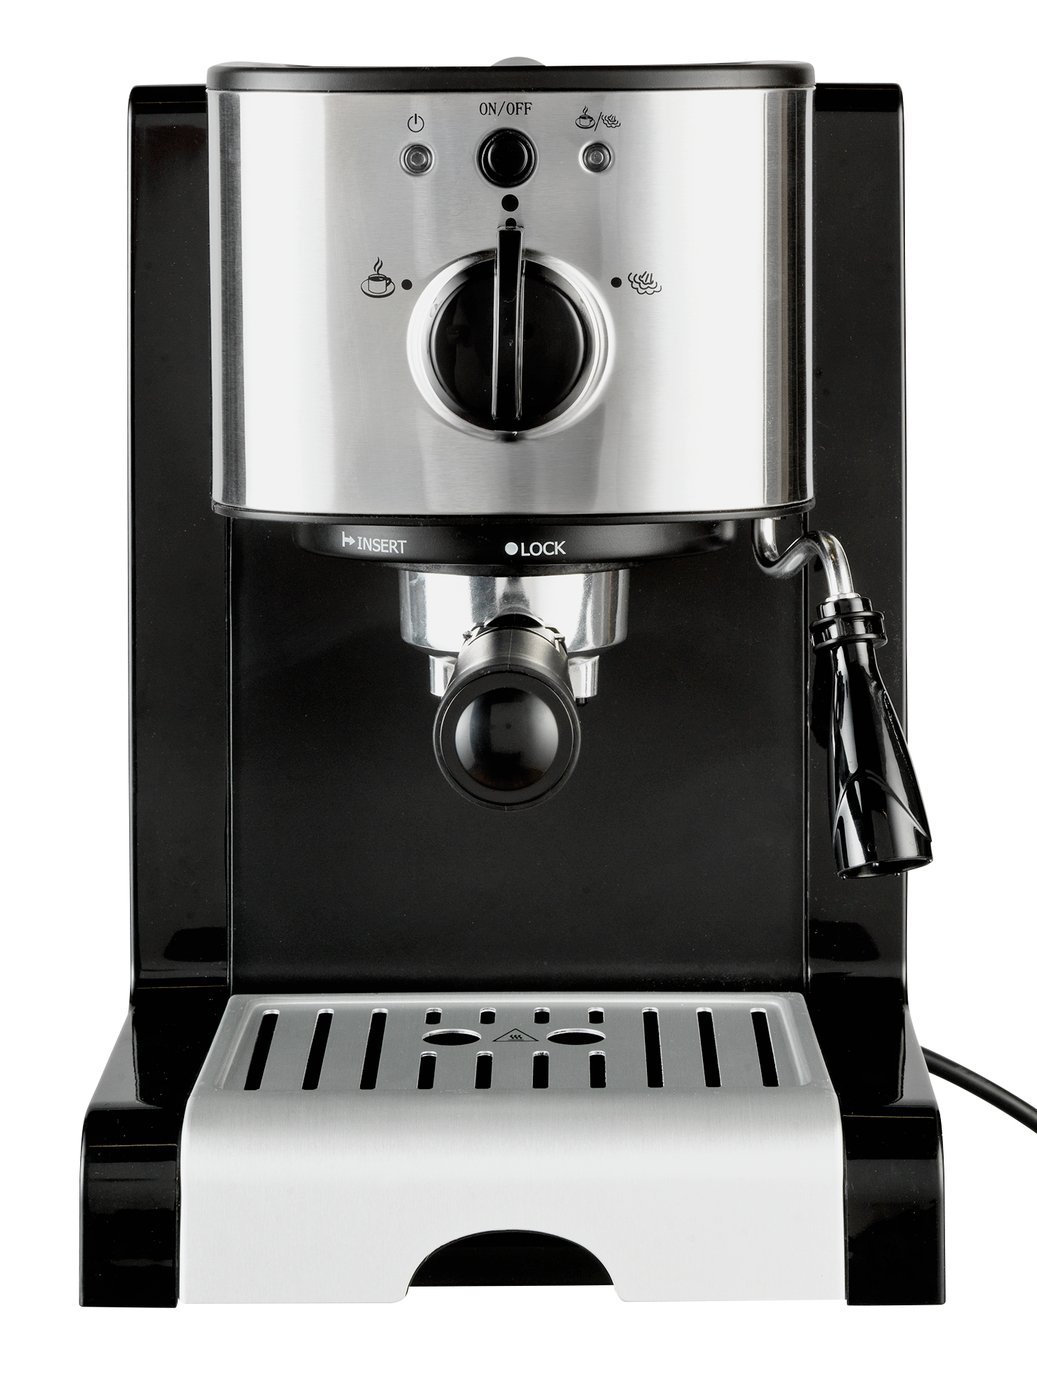 Cookworks Espresso Coffee Machine review